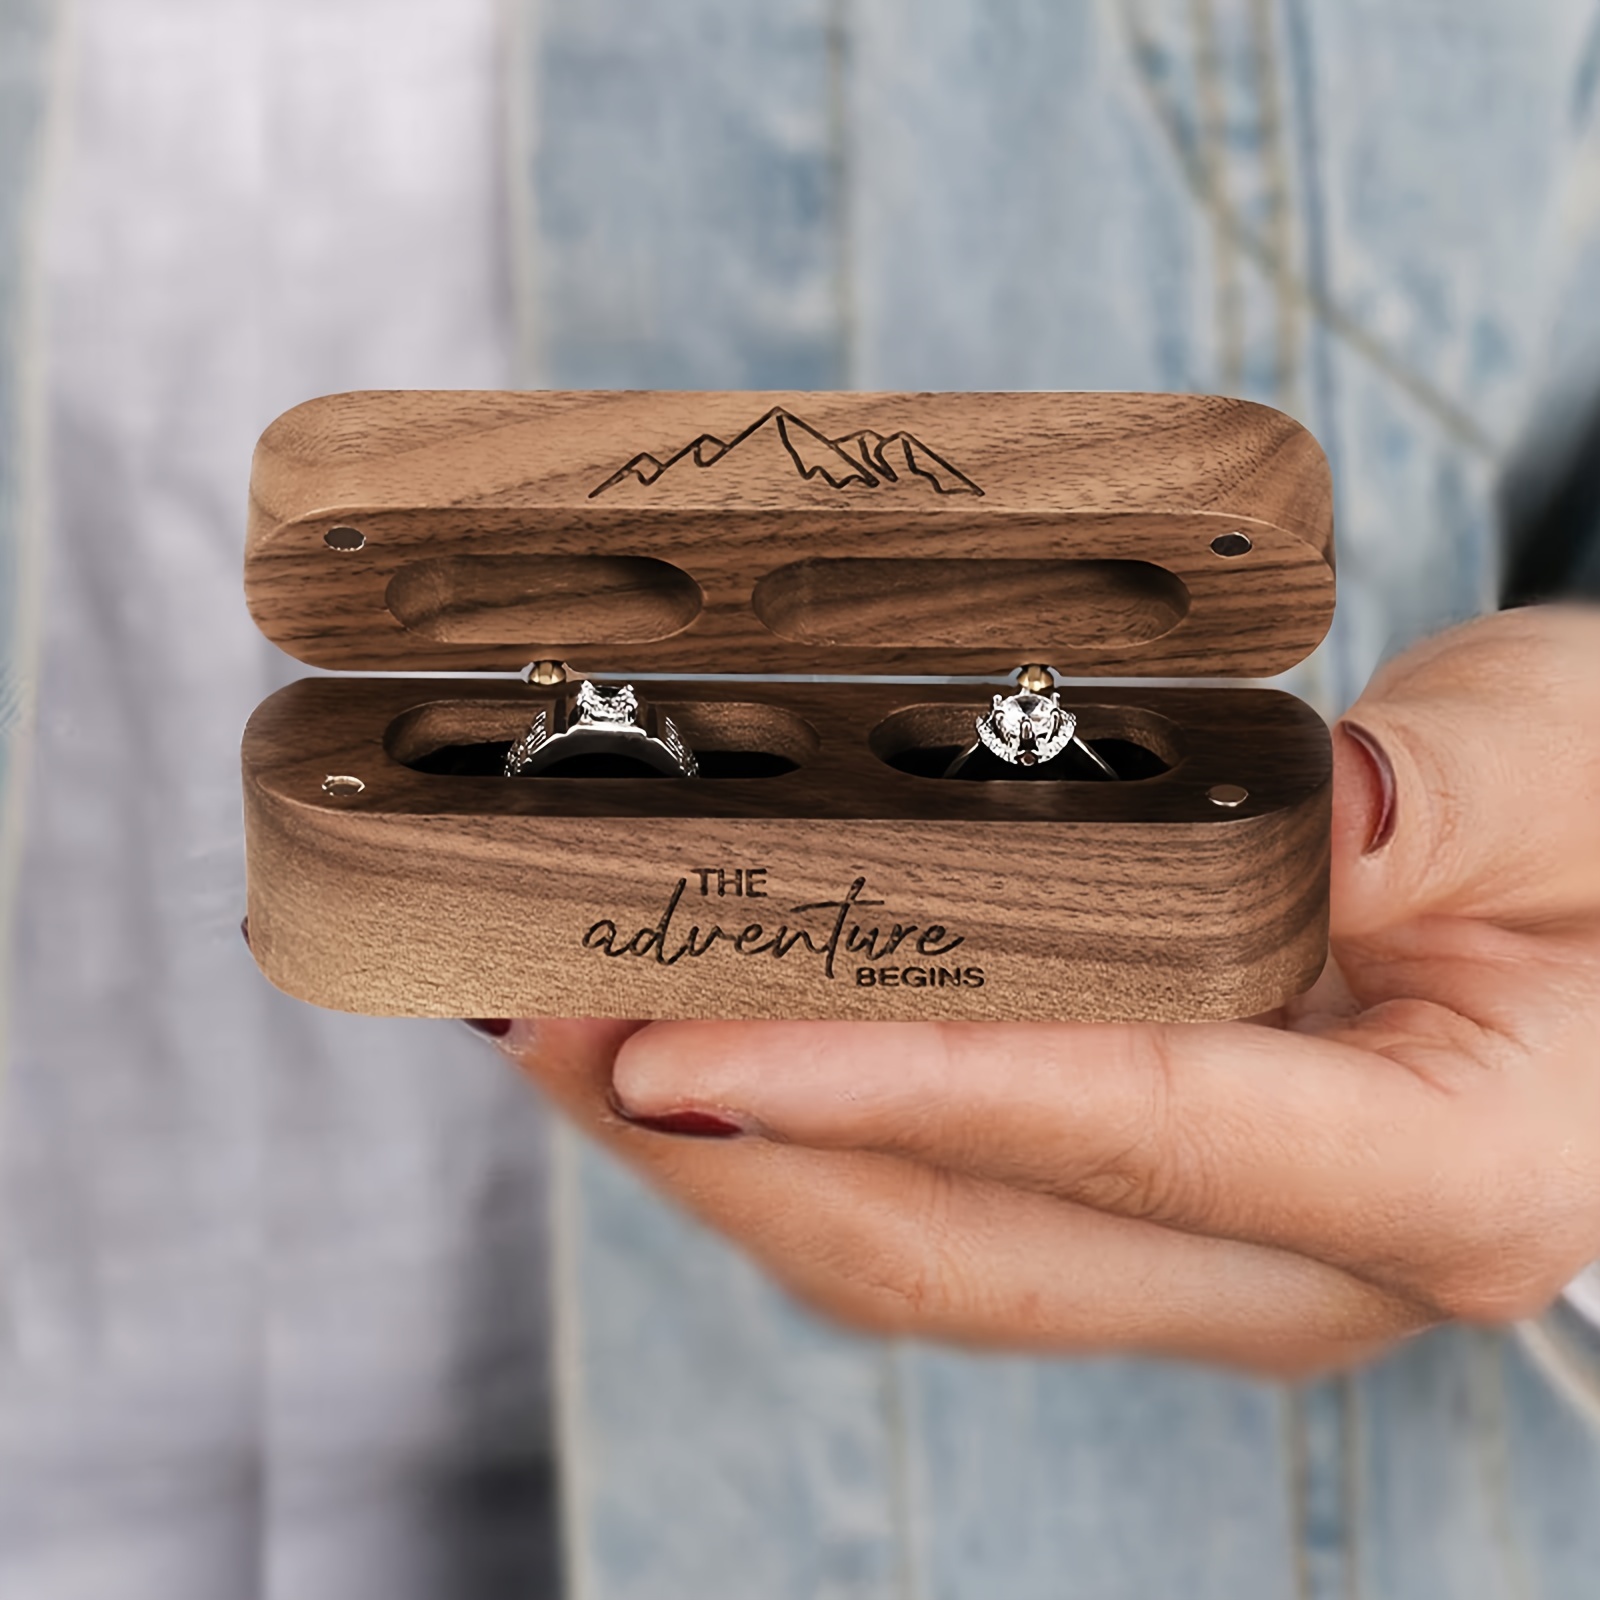 

1pc Wedding Ring Box, Wood Ring Box For Proposal, Engagement Ring Holder Case, Handmade Rustic Ring Box, Ring Storage Box